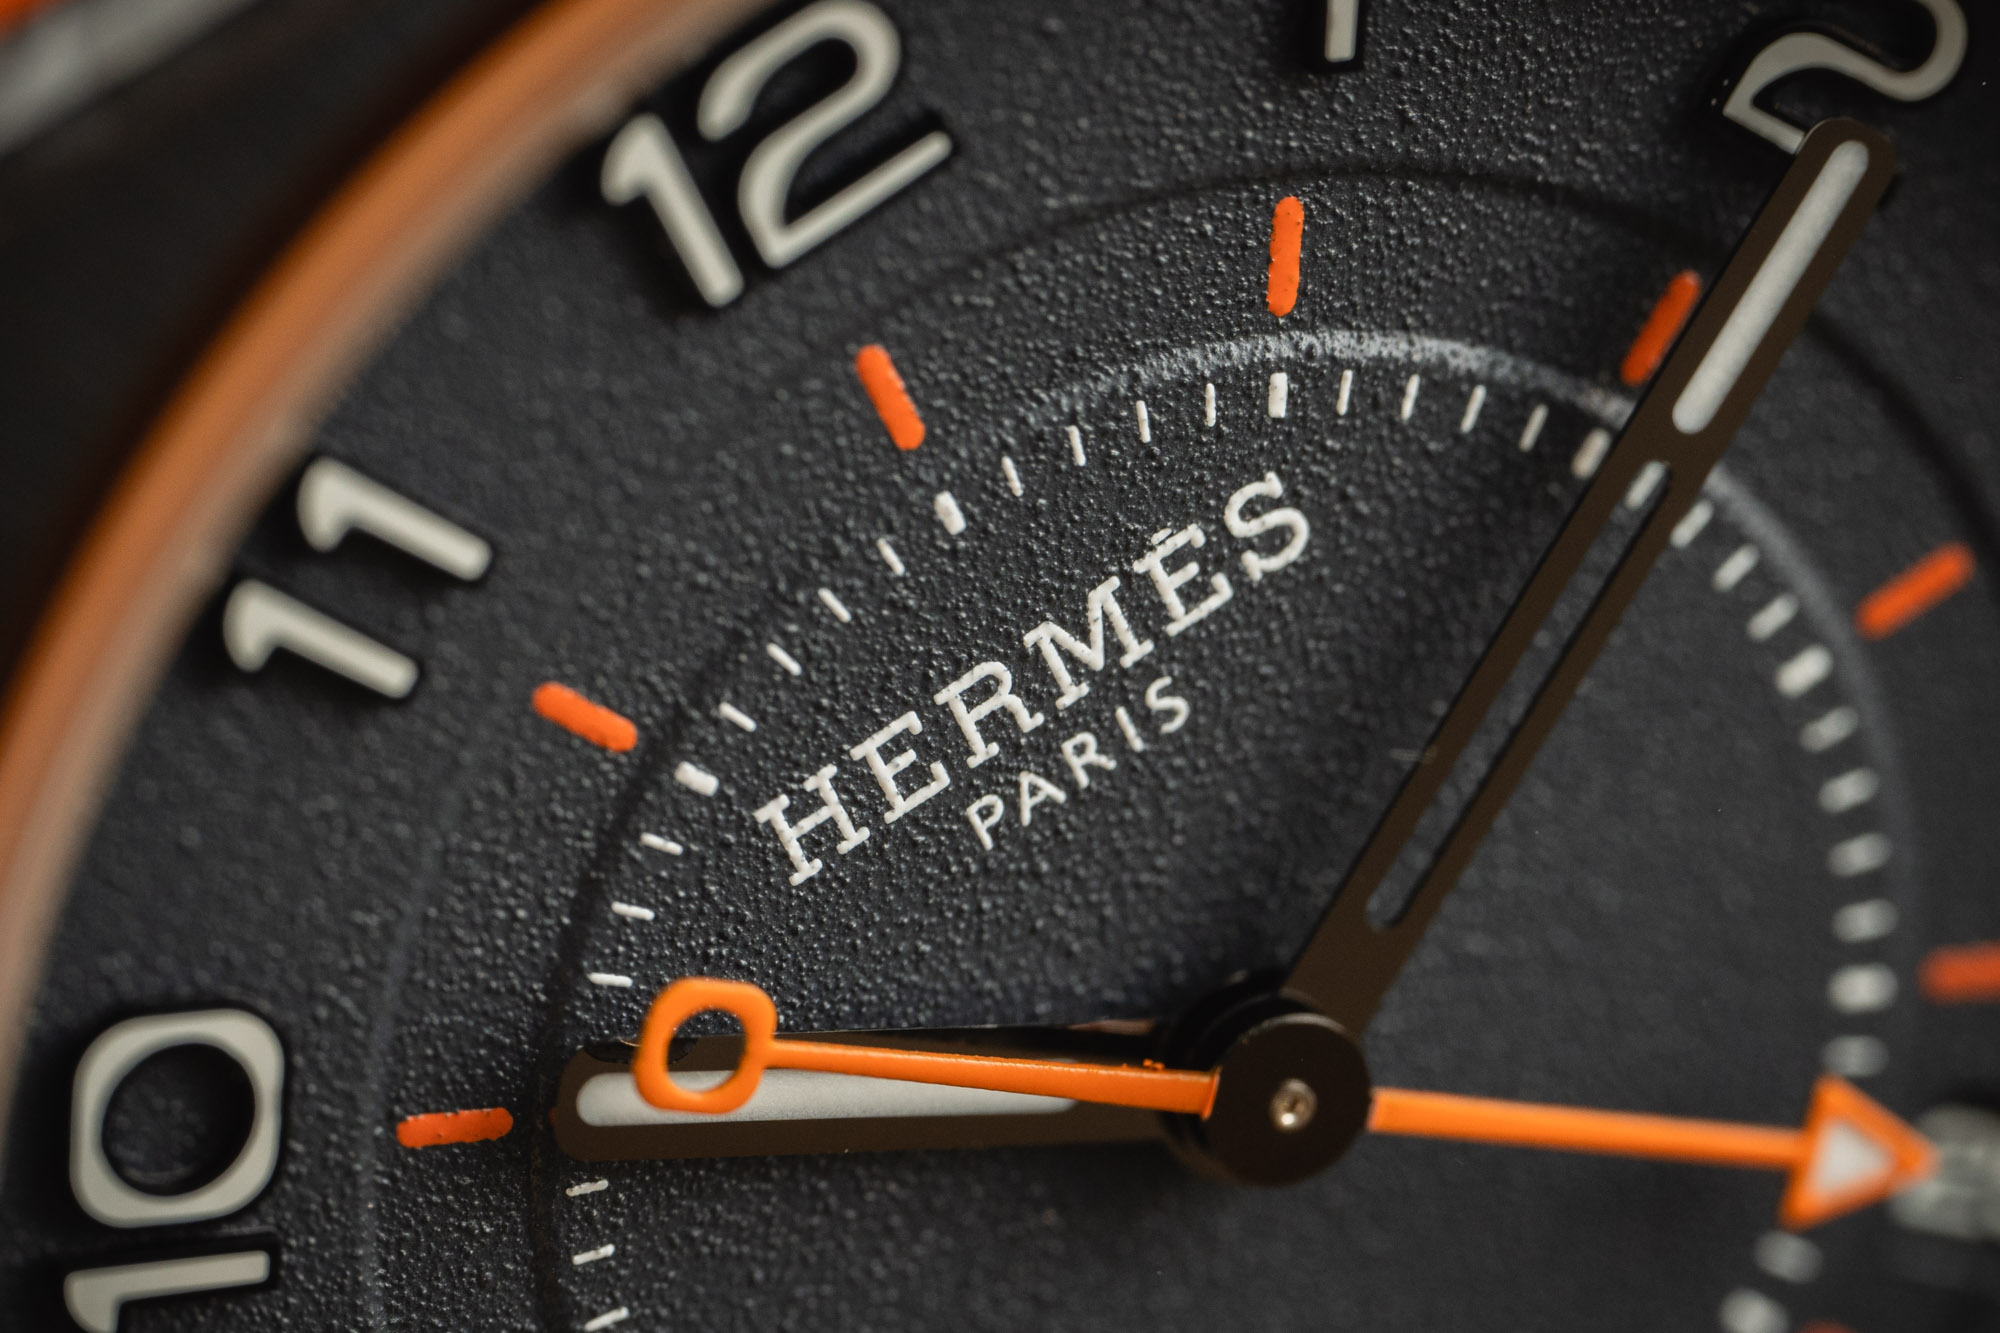 Hermès H08 Gets A Facelift With New Slate-Glass Fiber Composite Case